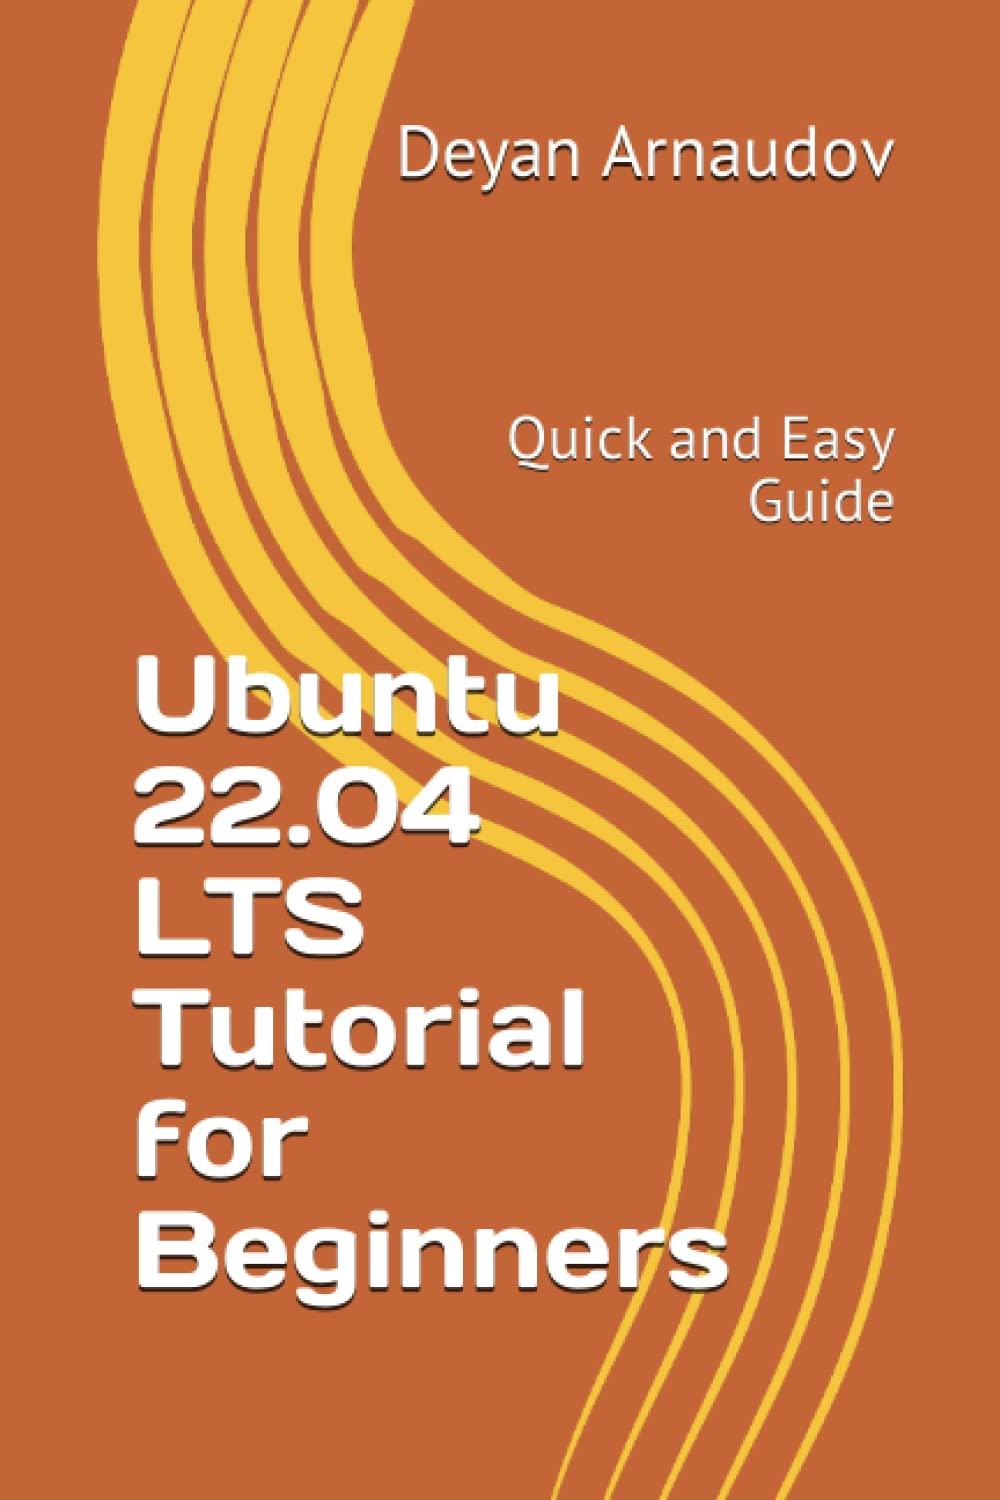 ubuntu 22.04 lts tutorial for beginners: quick and easy 1st edition deyan arnaudov b0bzfg3fdc, 979-8371445322